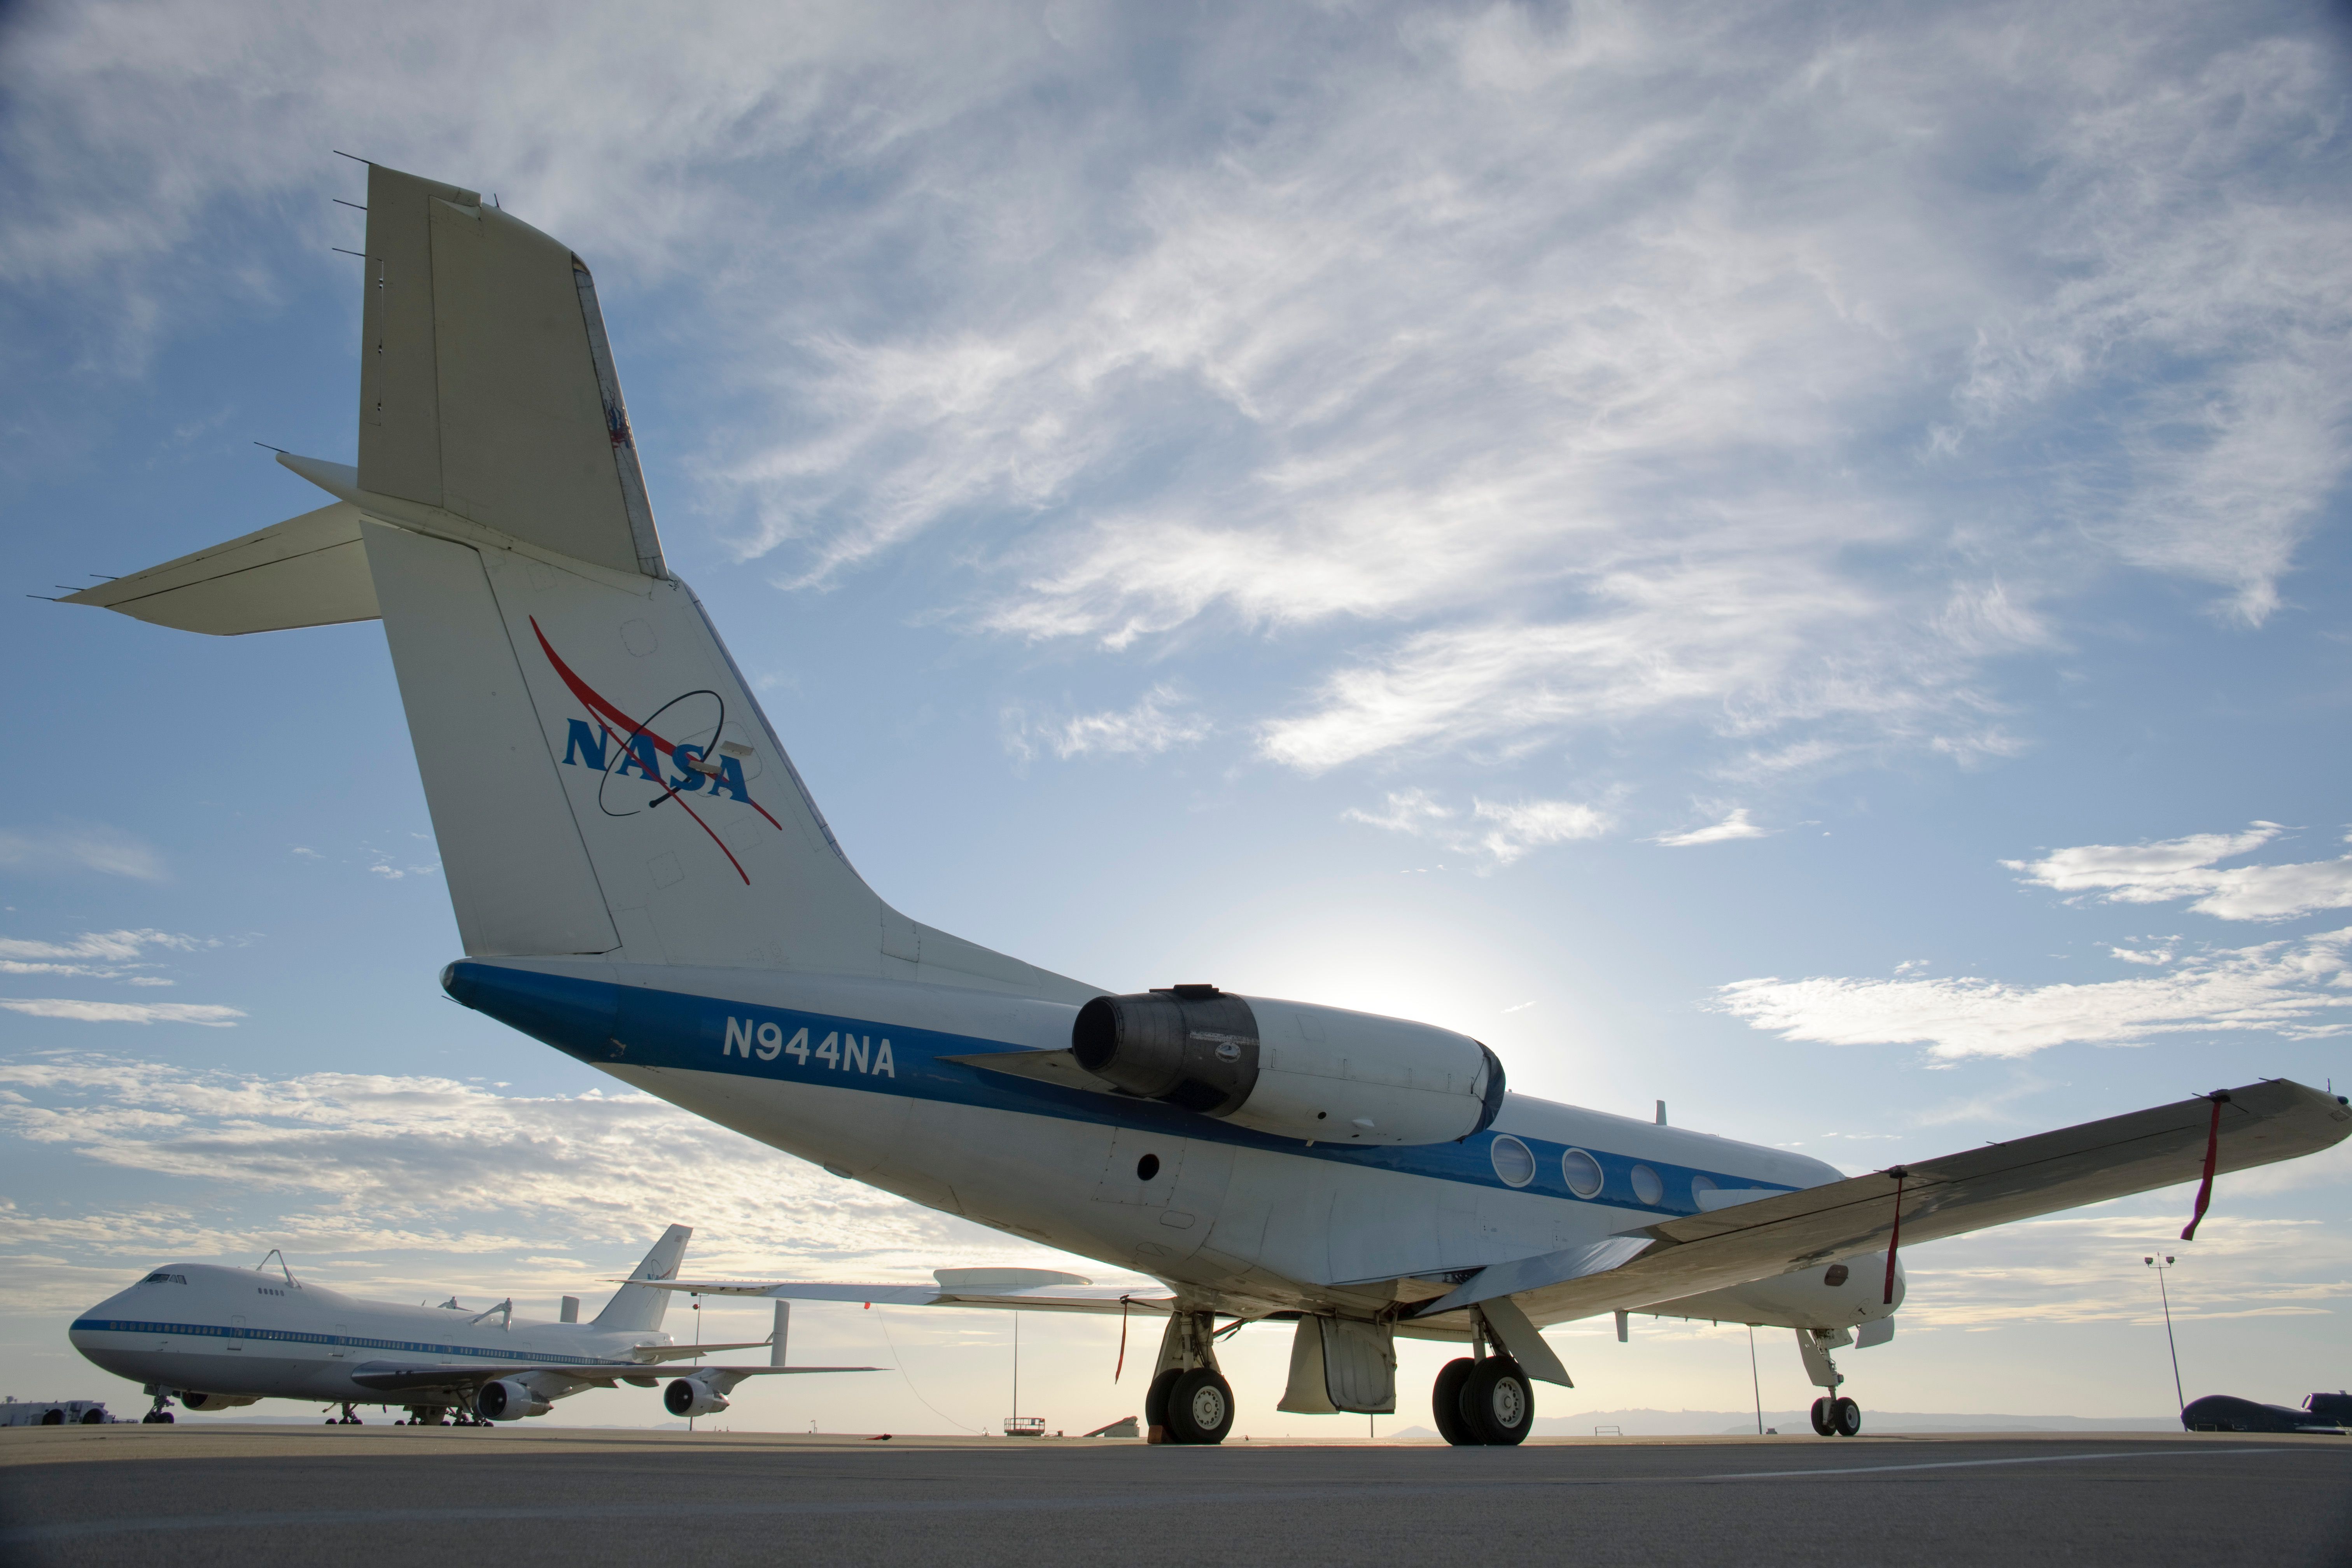 Gulfstream II for NASA space shuttle training